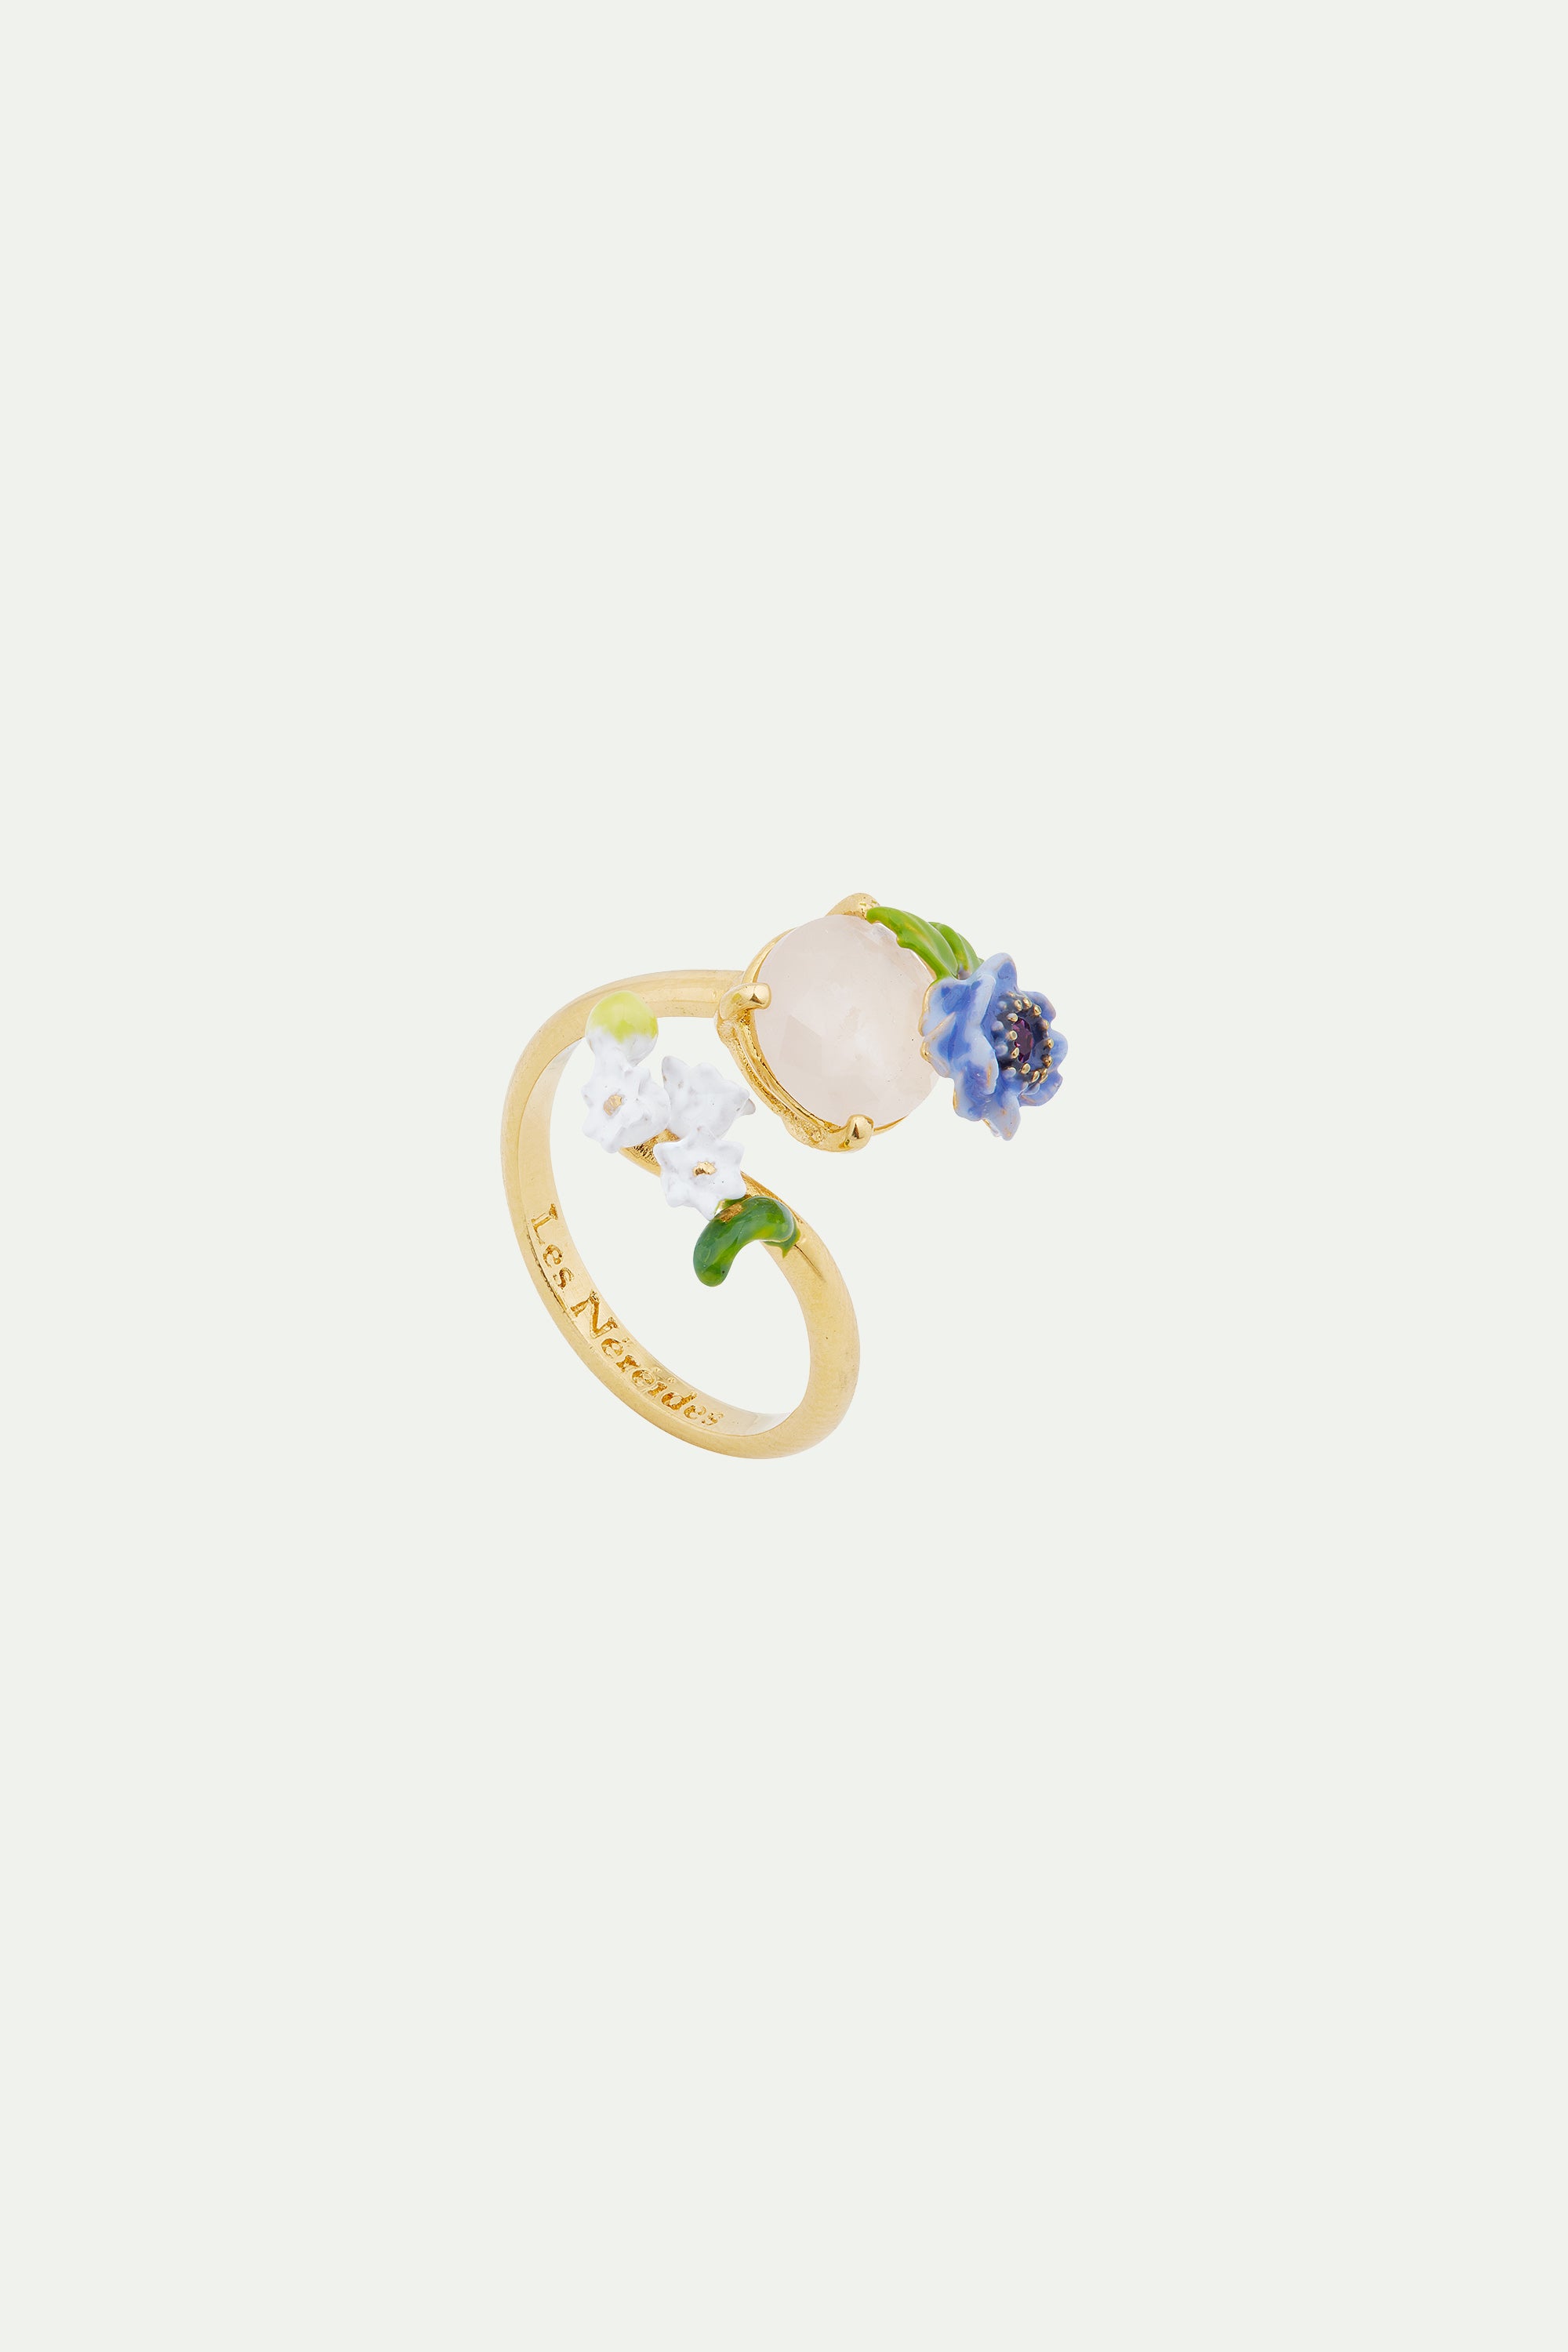 Rose quartz and floral composition adjustable ring